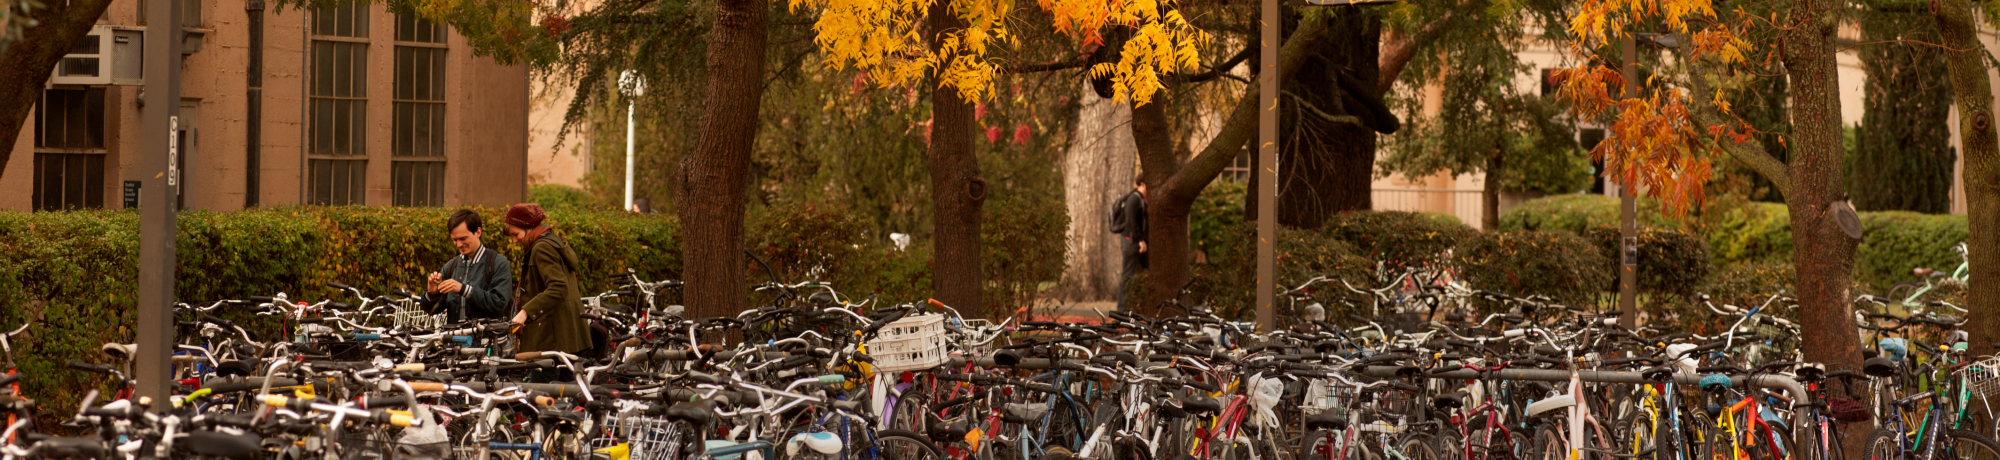 Bikes at UC Davis